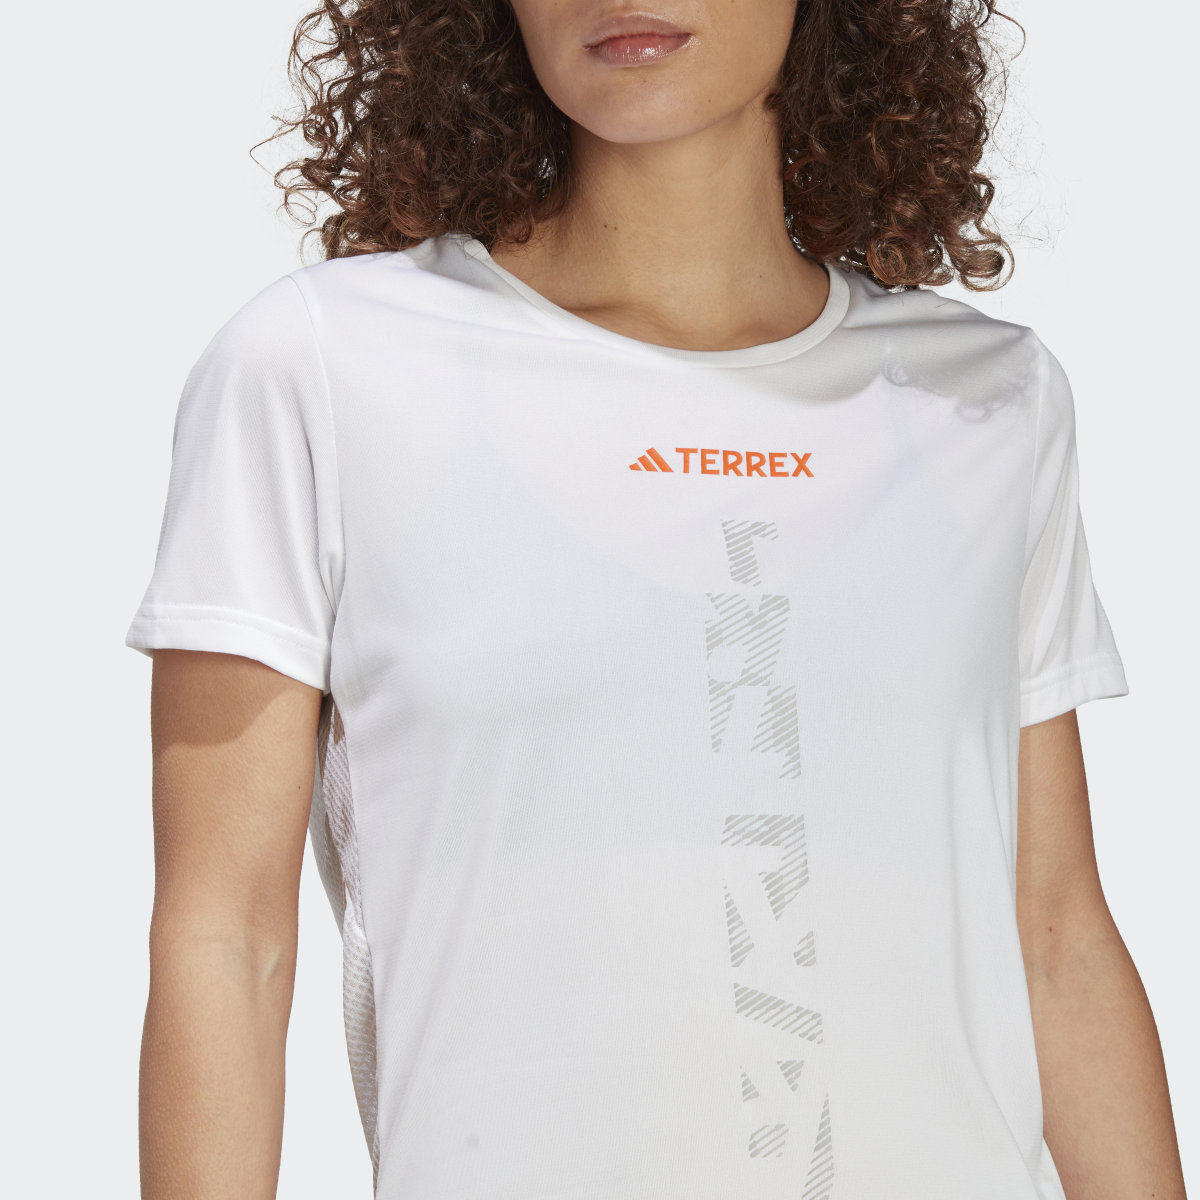 Adidas TERREX Agravic Trail Running T-Shirt. 8